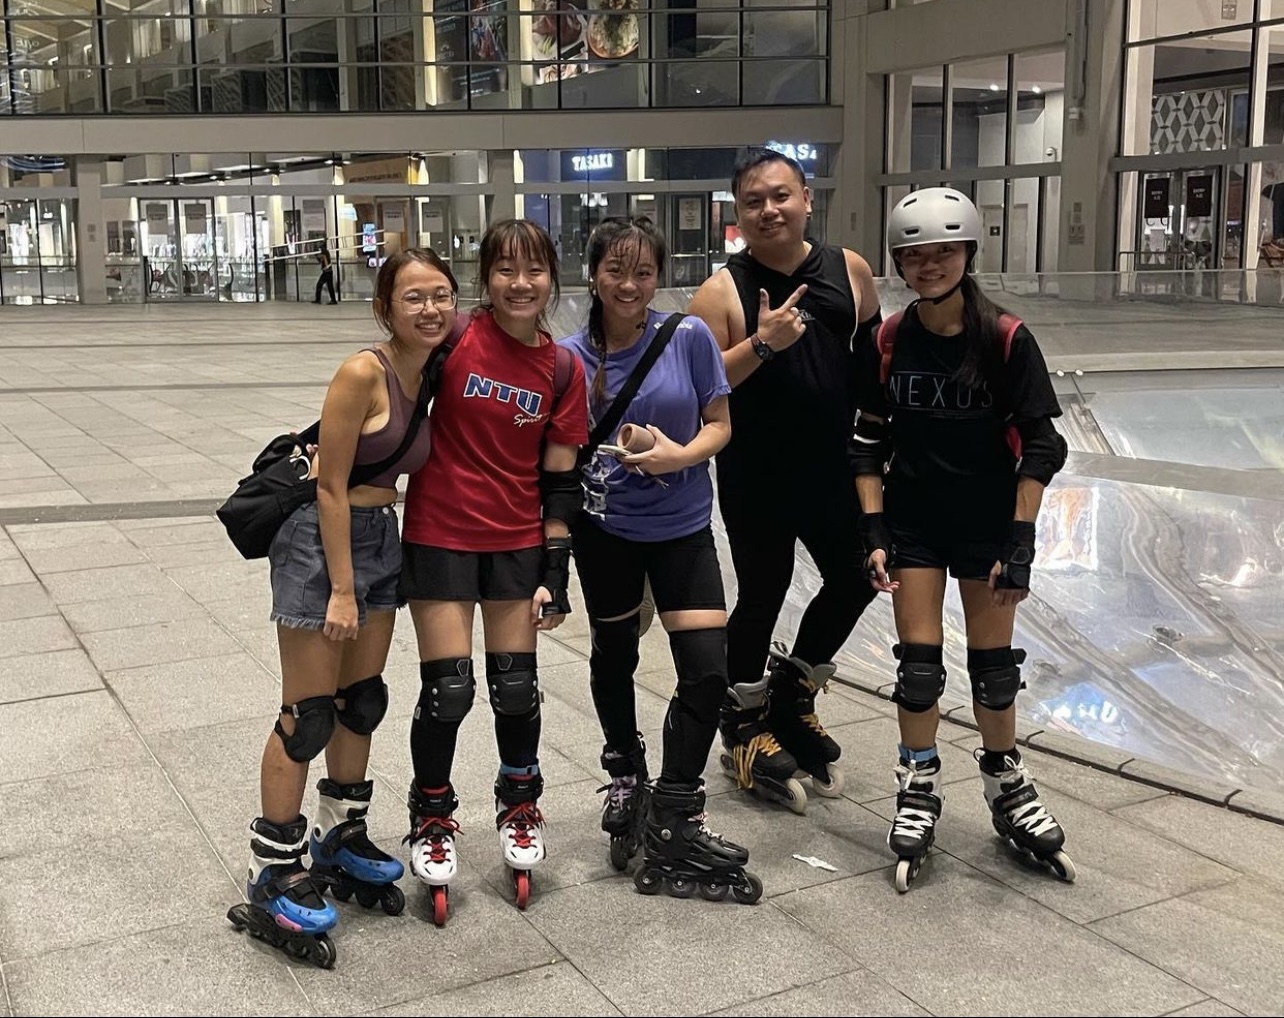 urban-inline-skating-friends-together